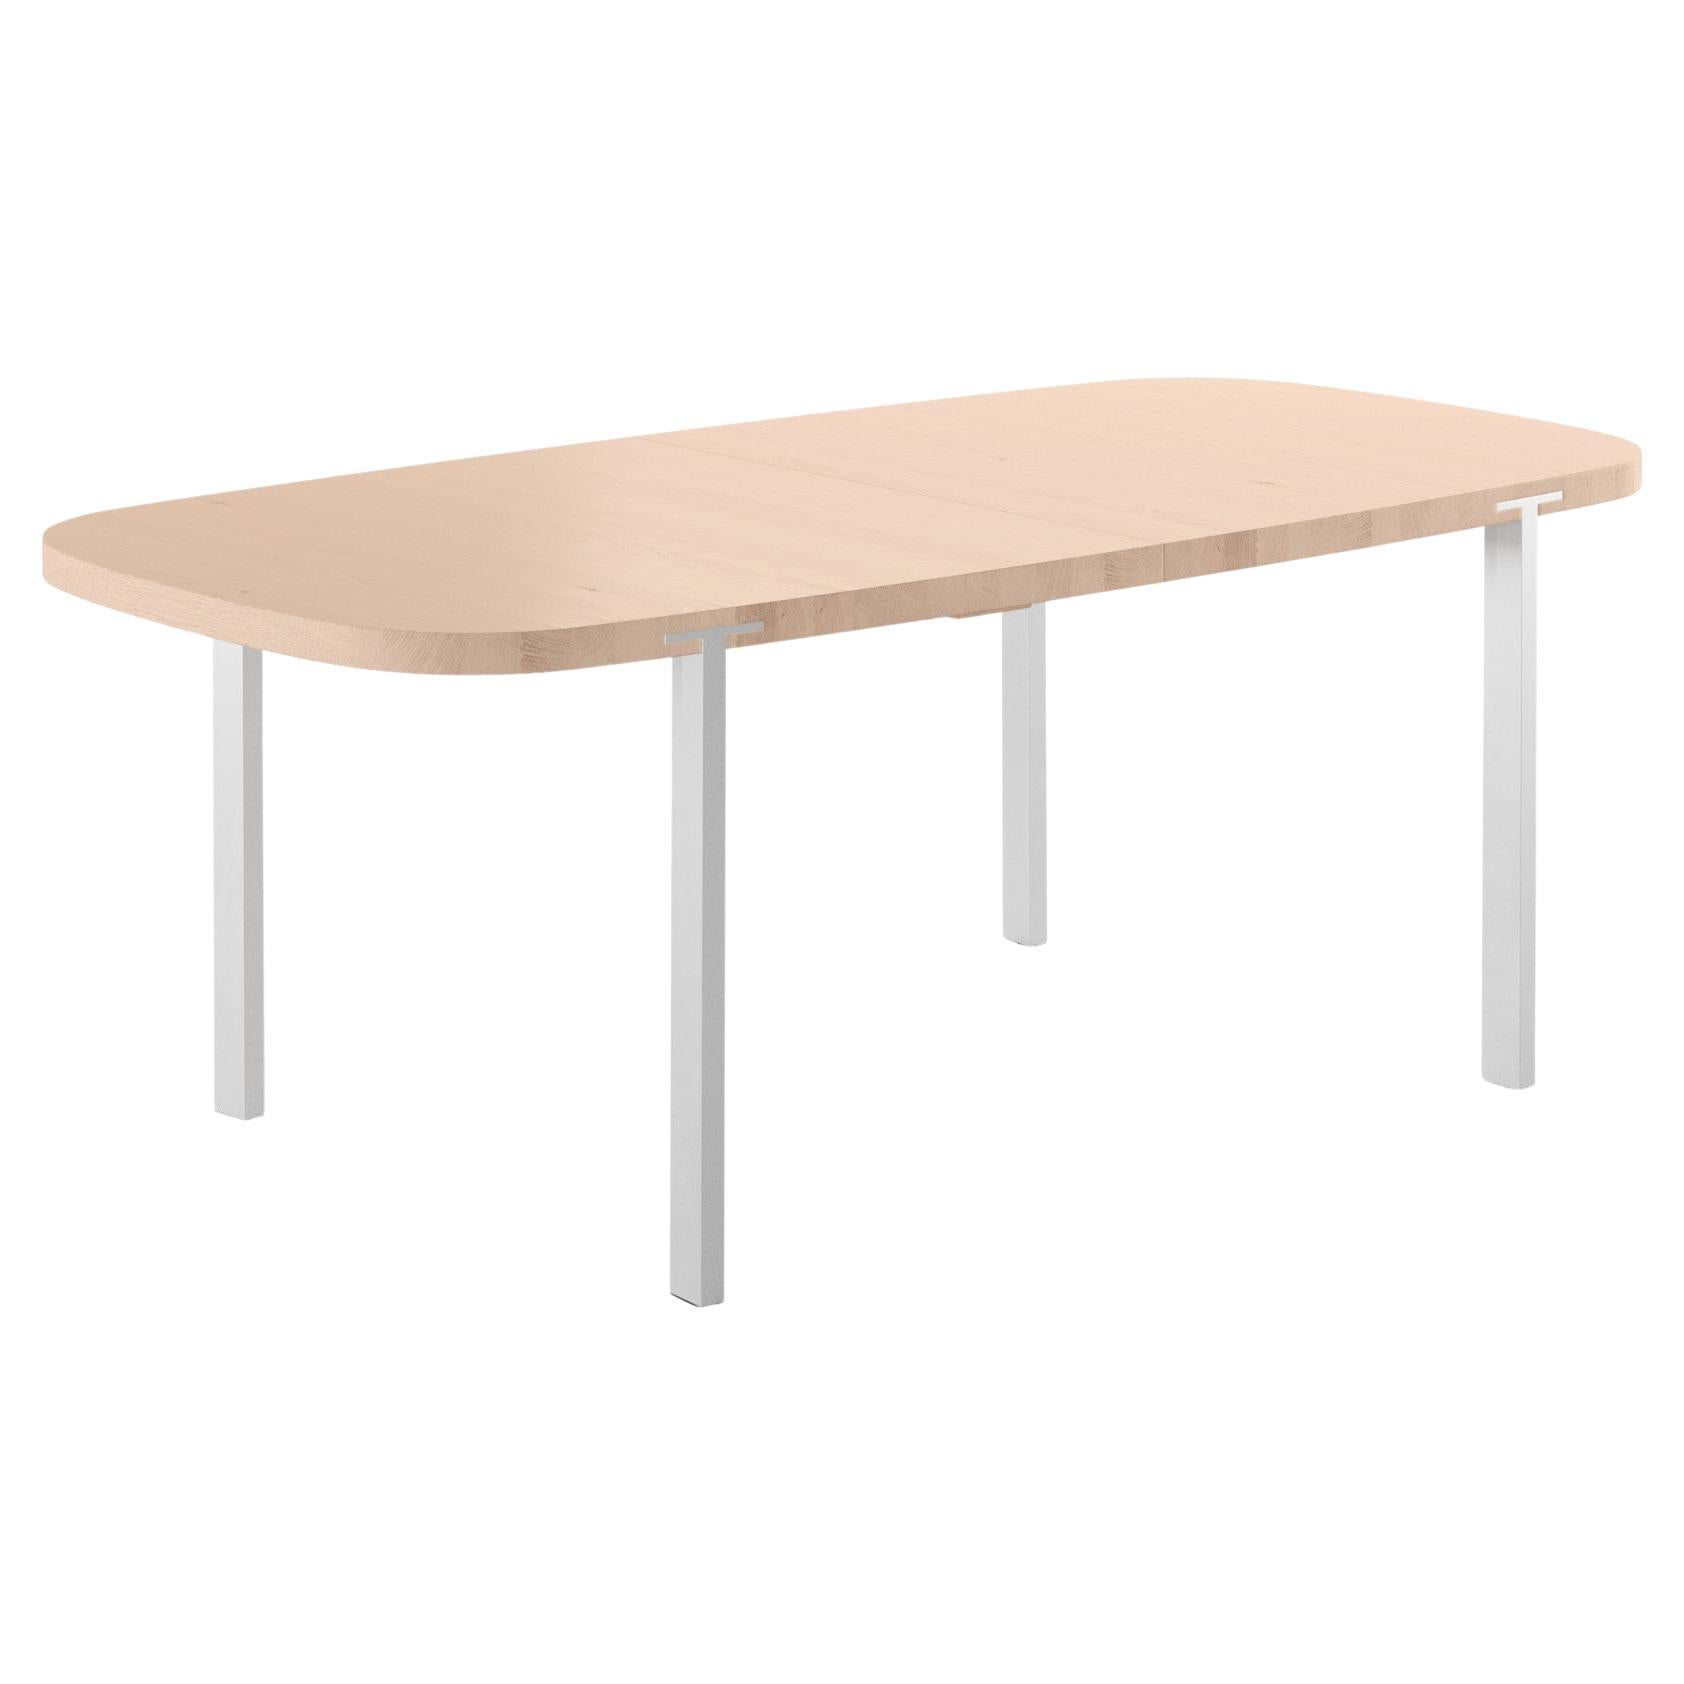 GM2122 Super Ellipse Table, Oak - Design by Nissen & Gehl MDD